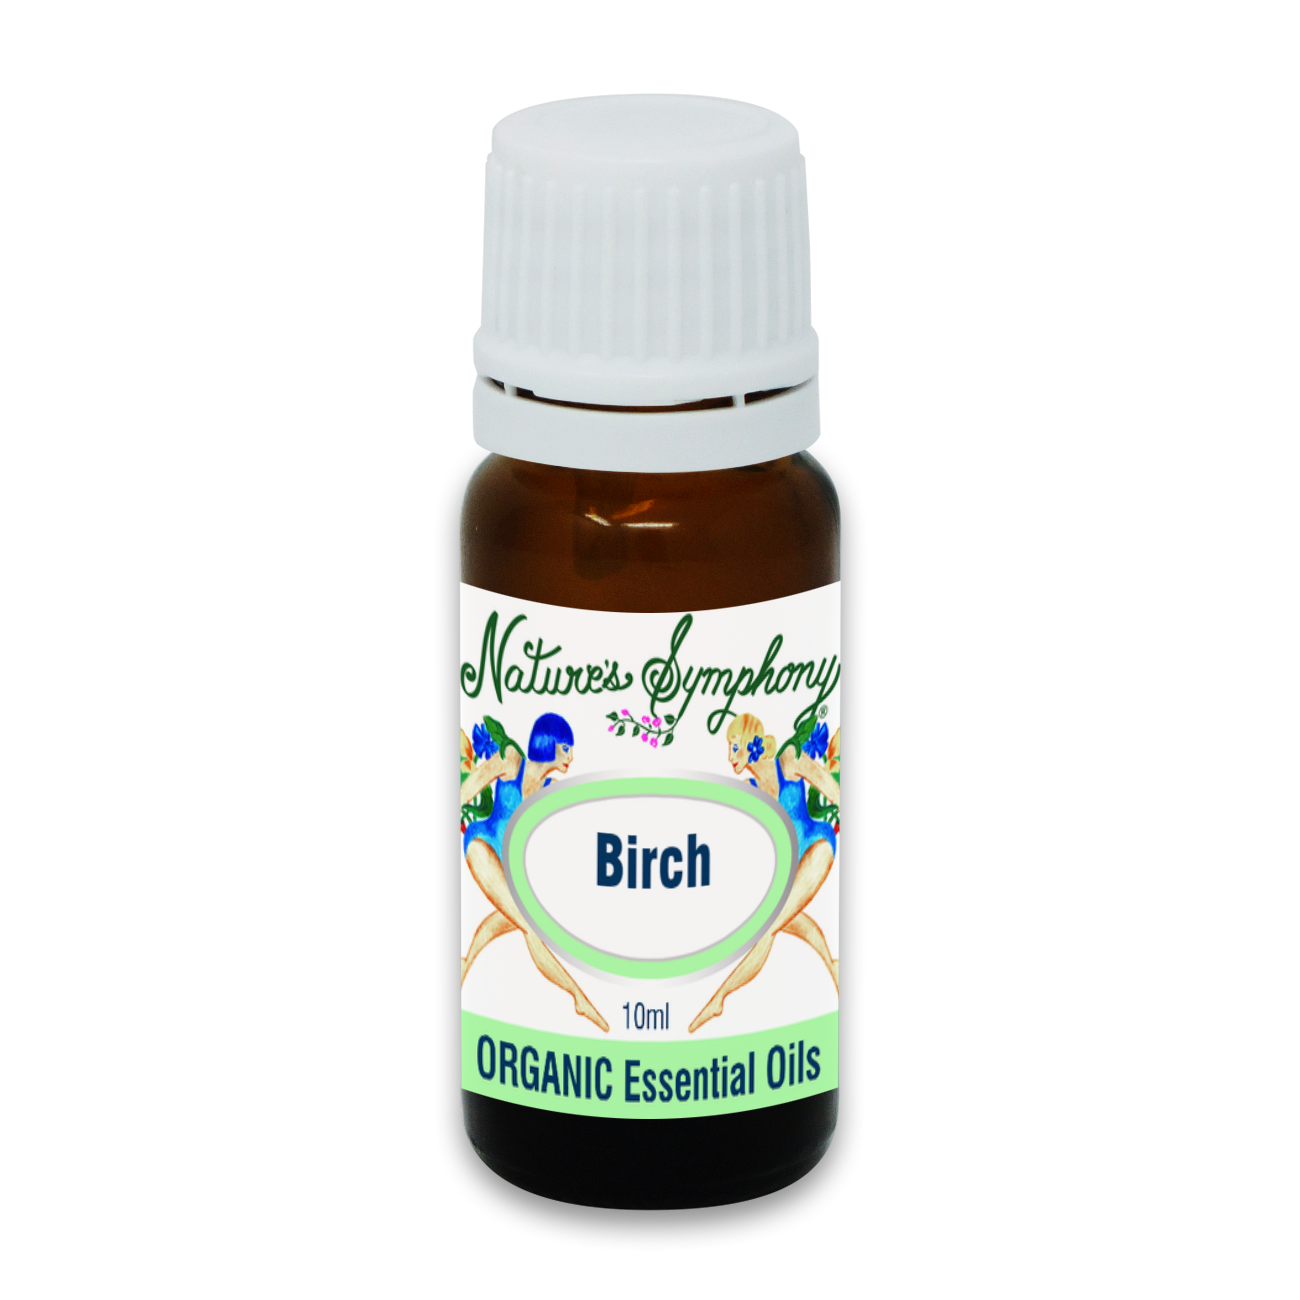 Birch, Organic/Wildcrafted oil - 10ml